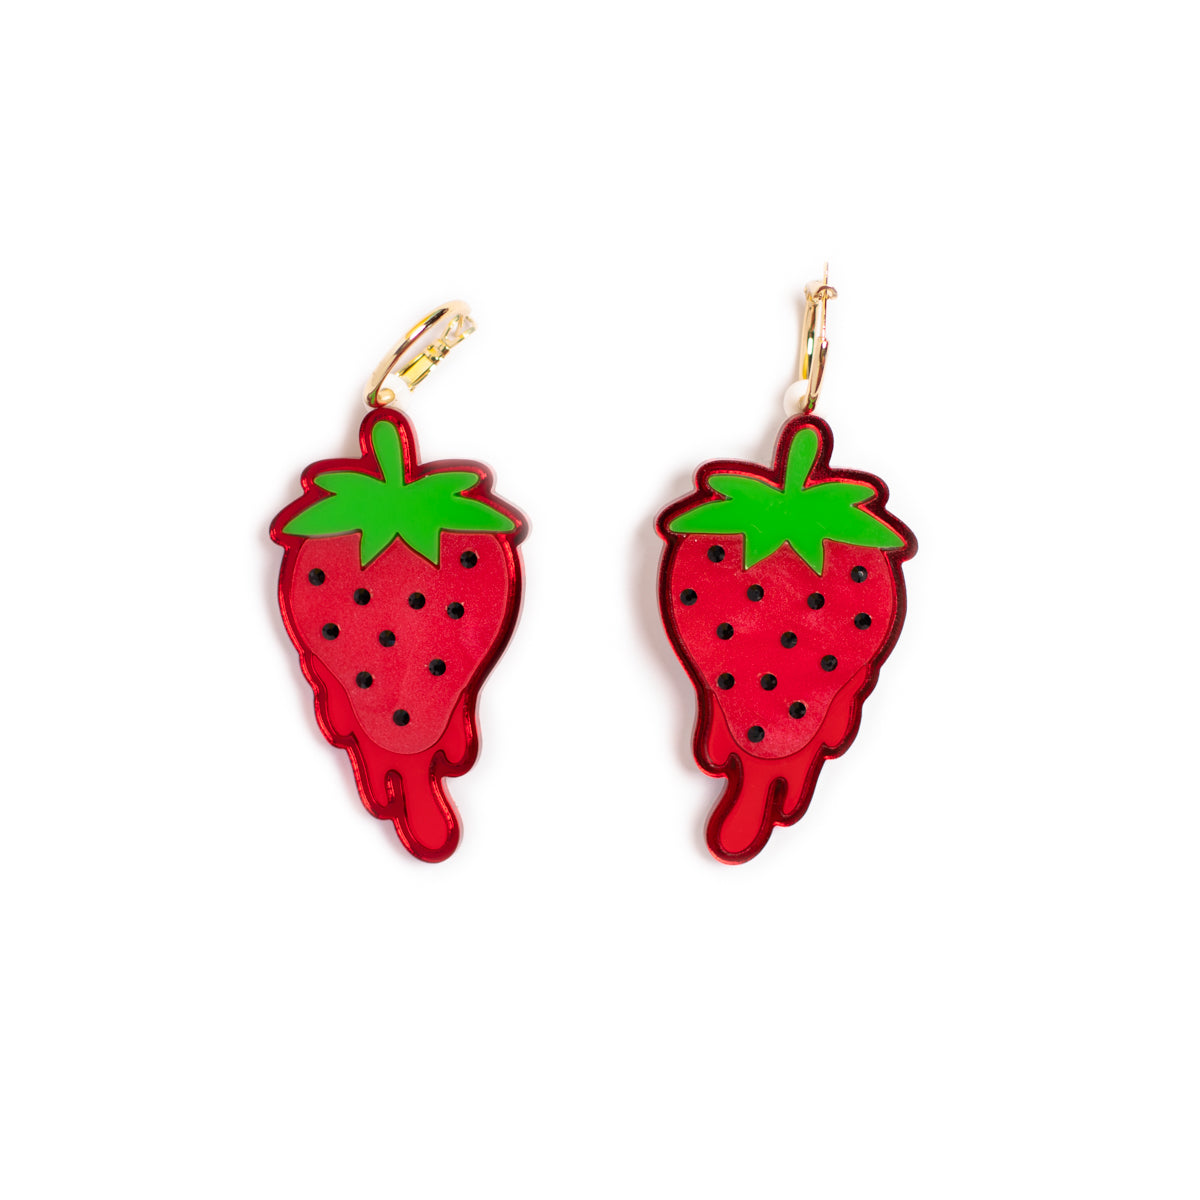 The Fruity Mix & Match Earrings